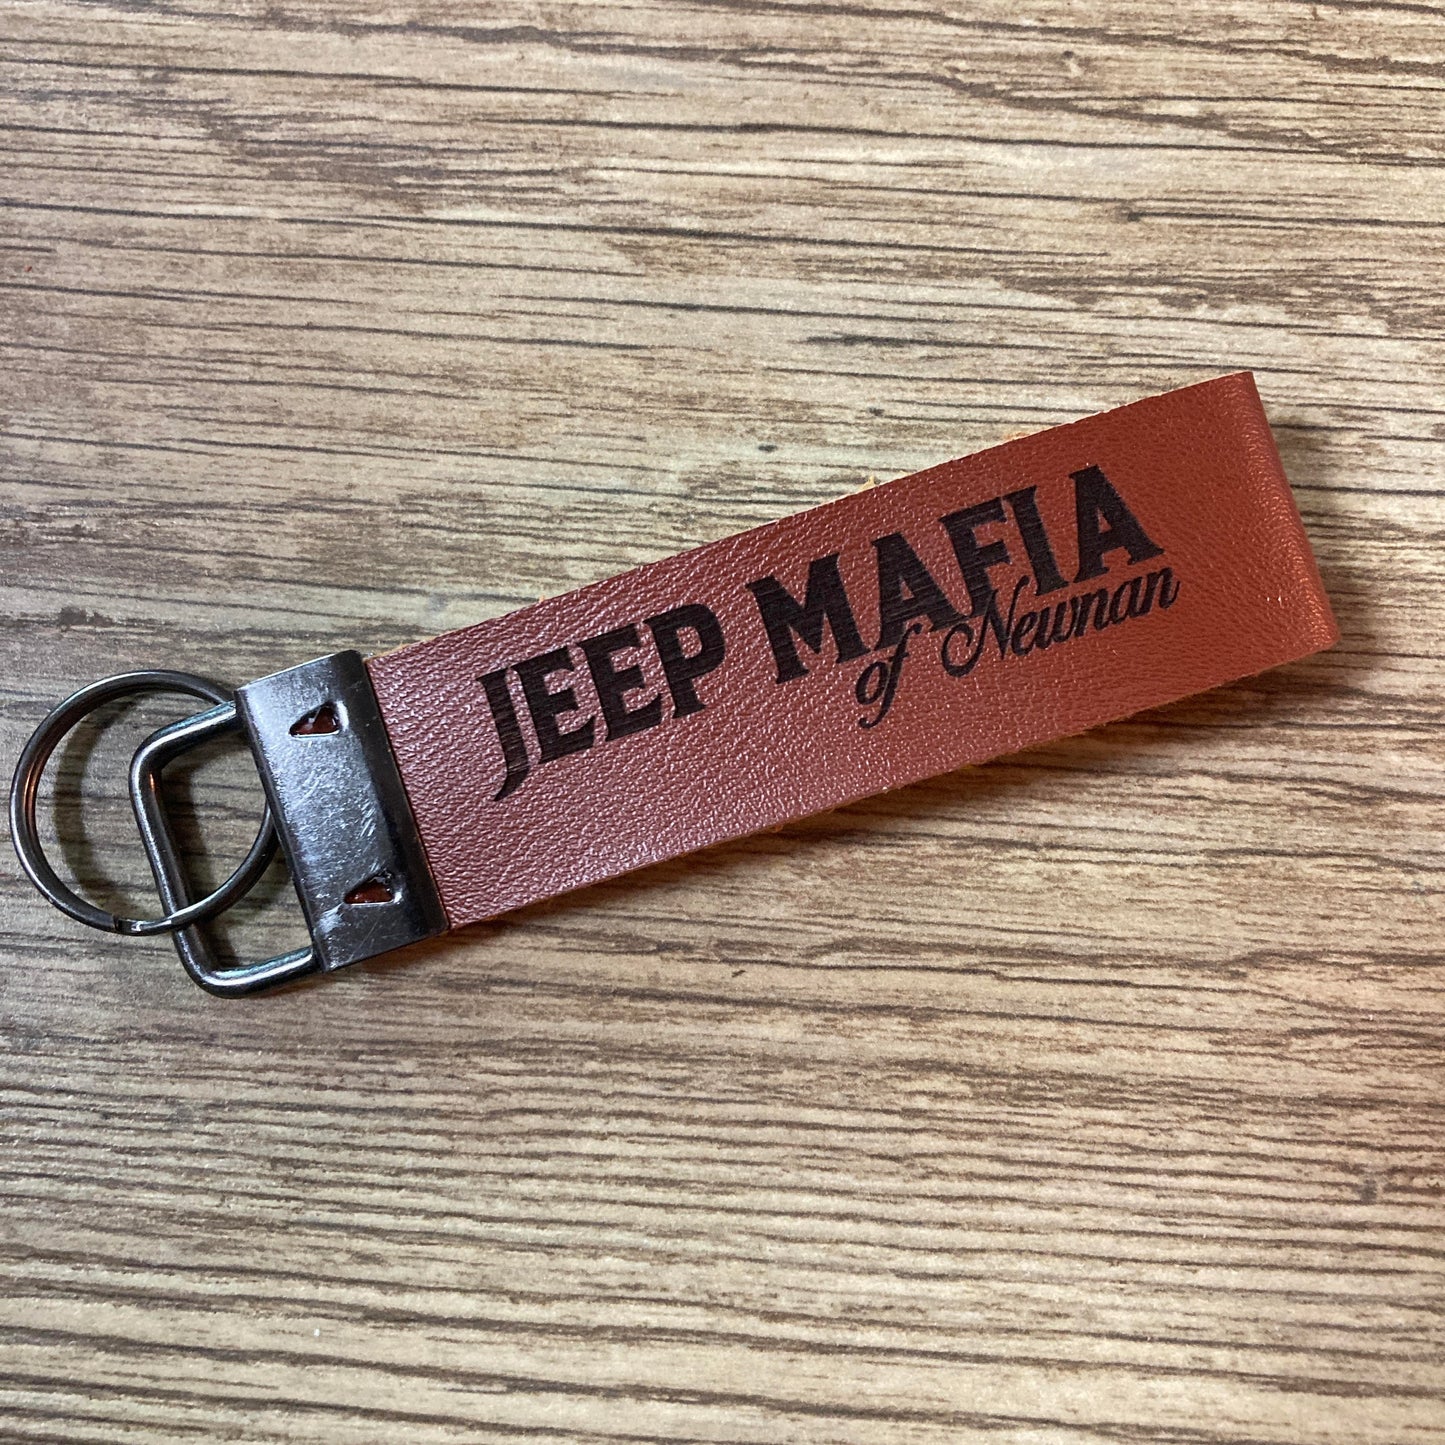 Jeep Mafia of Newnan Jeep Camp Weekend Leather Keychain